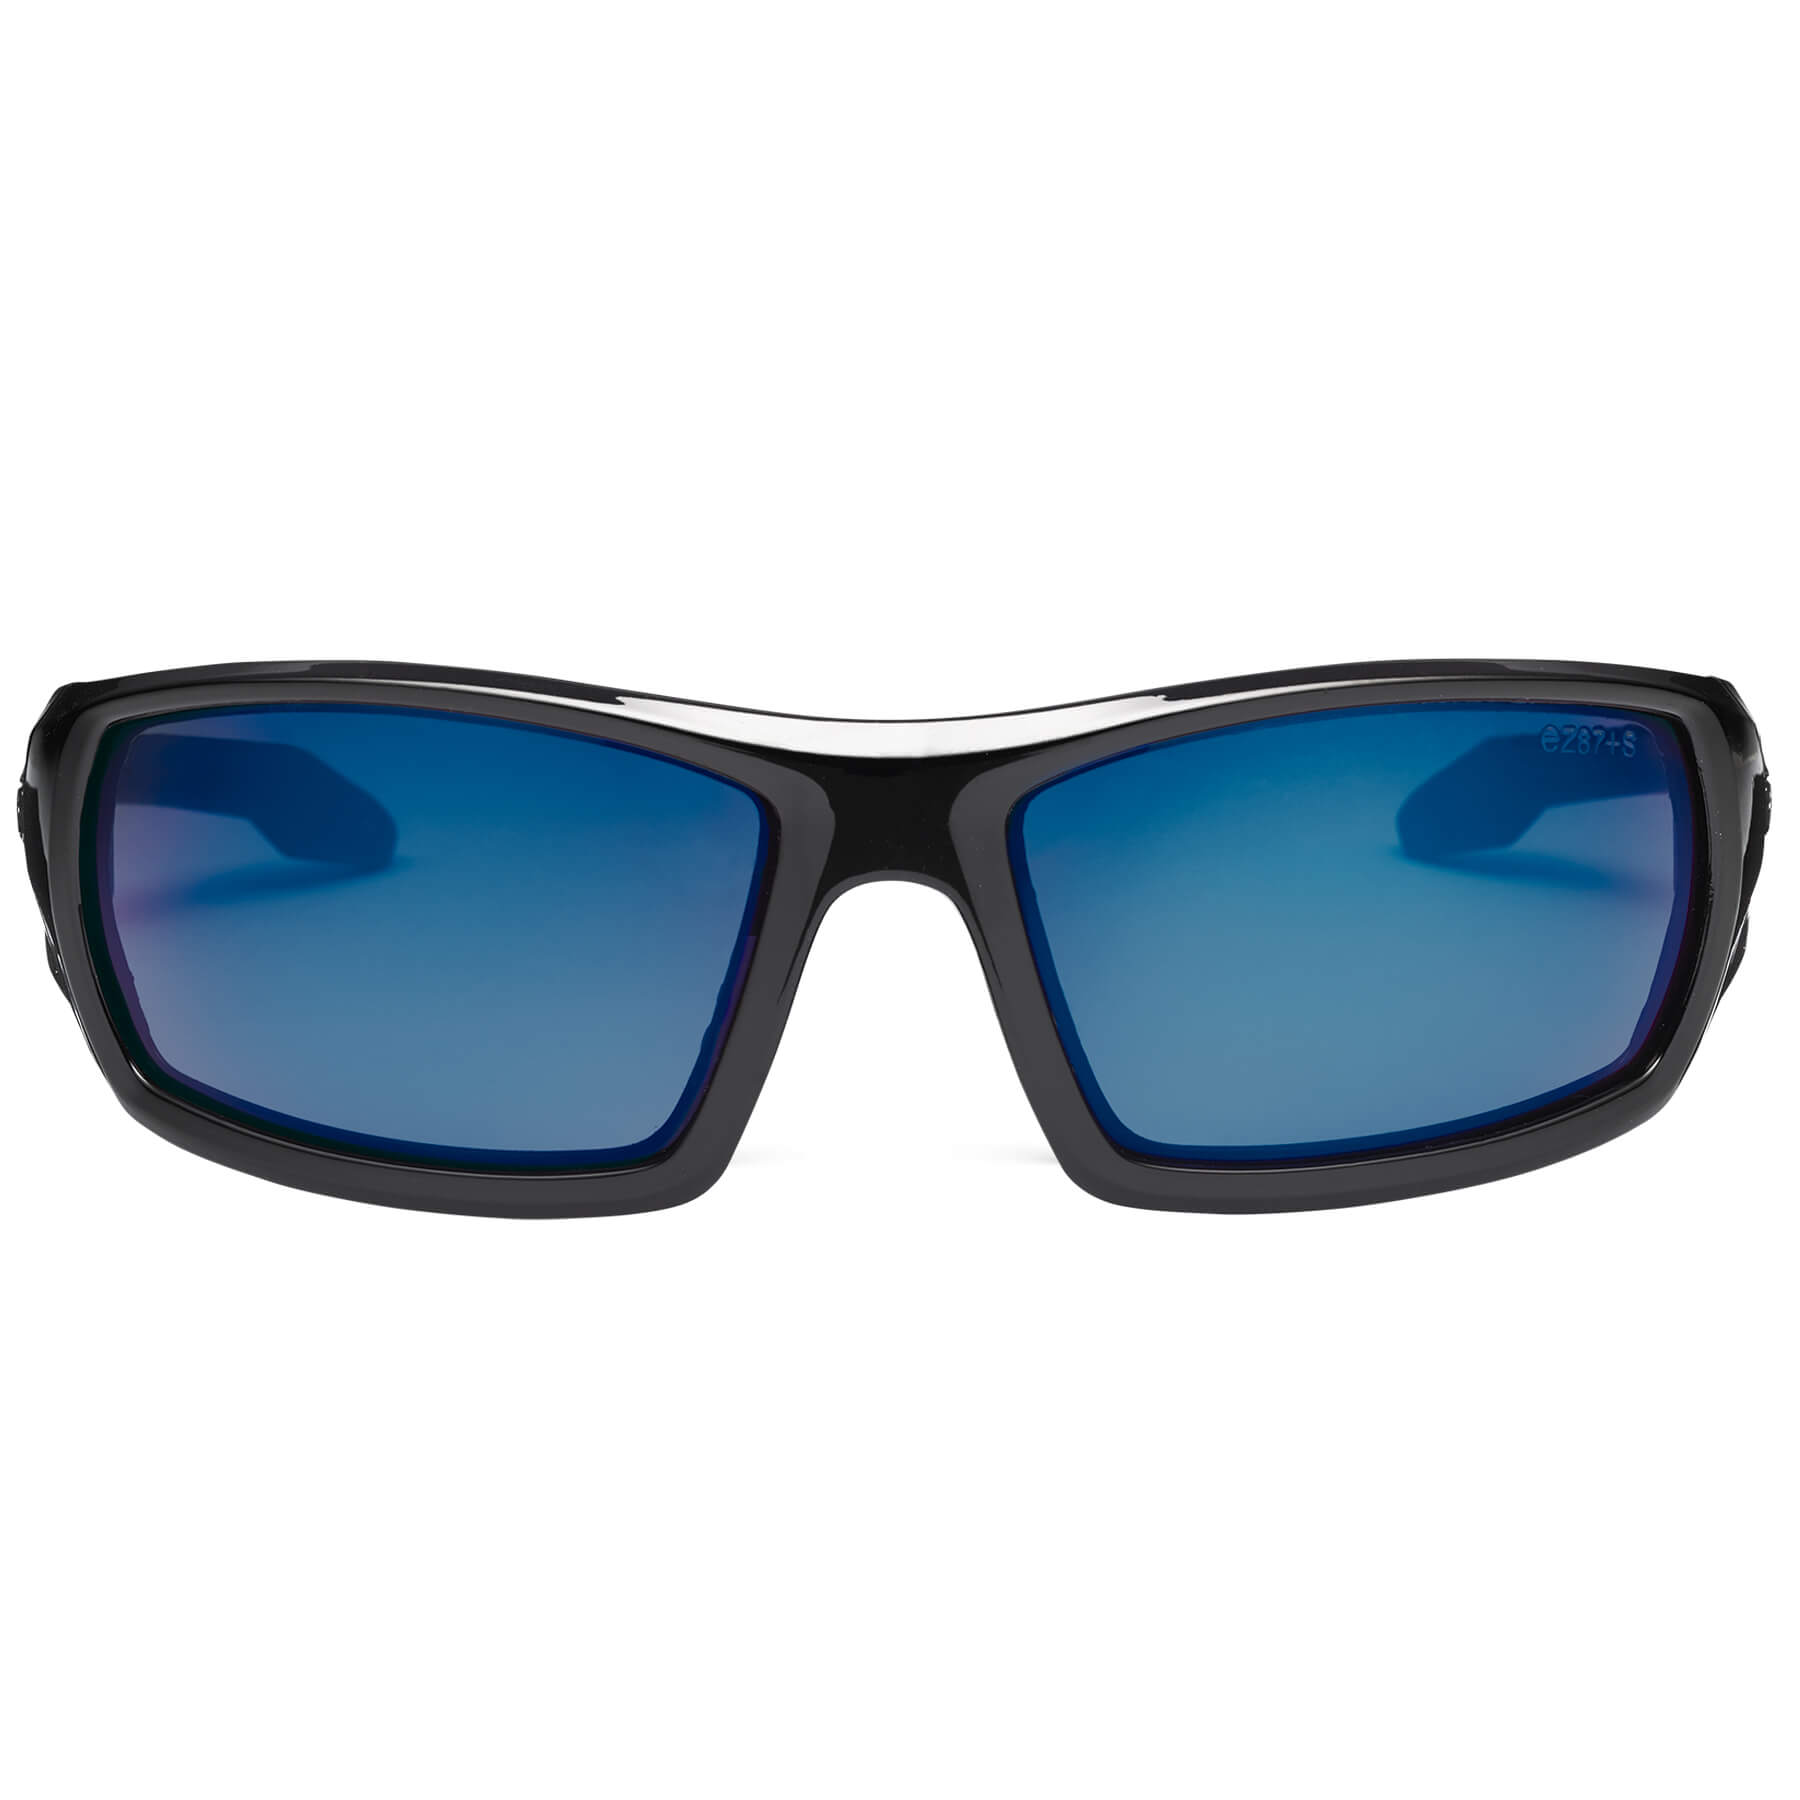 Ergodyne Skullerz Odin Safety Sunglasses- Black Frame, Blue Mirror Lens - image 2 of 2